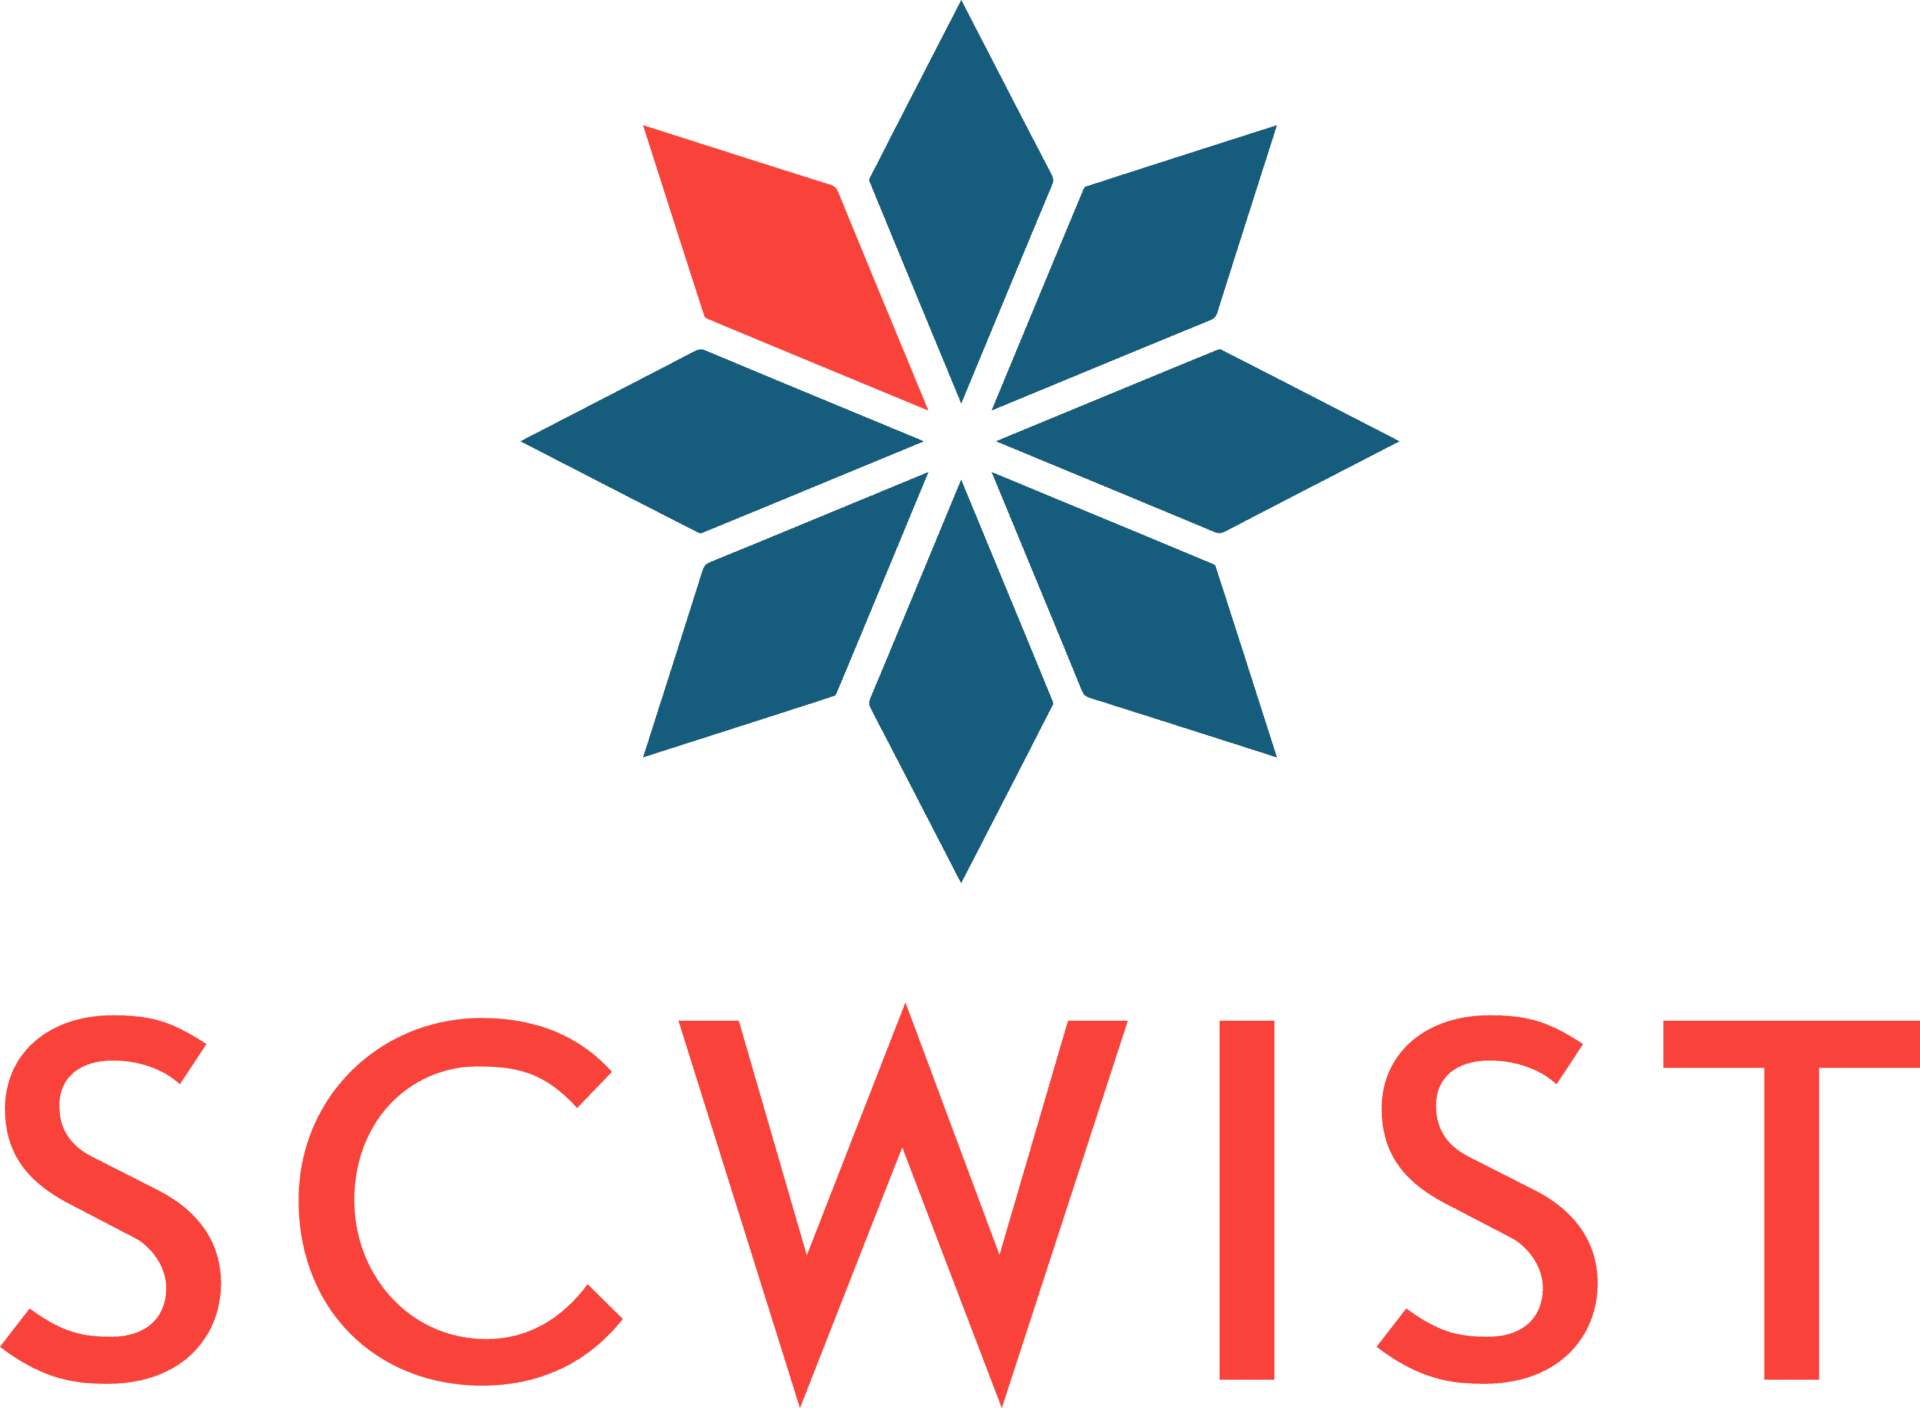 SCWIST logo